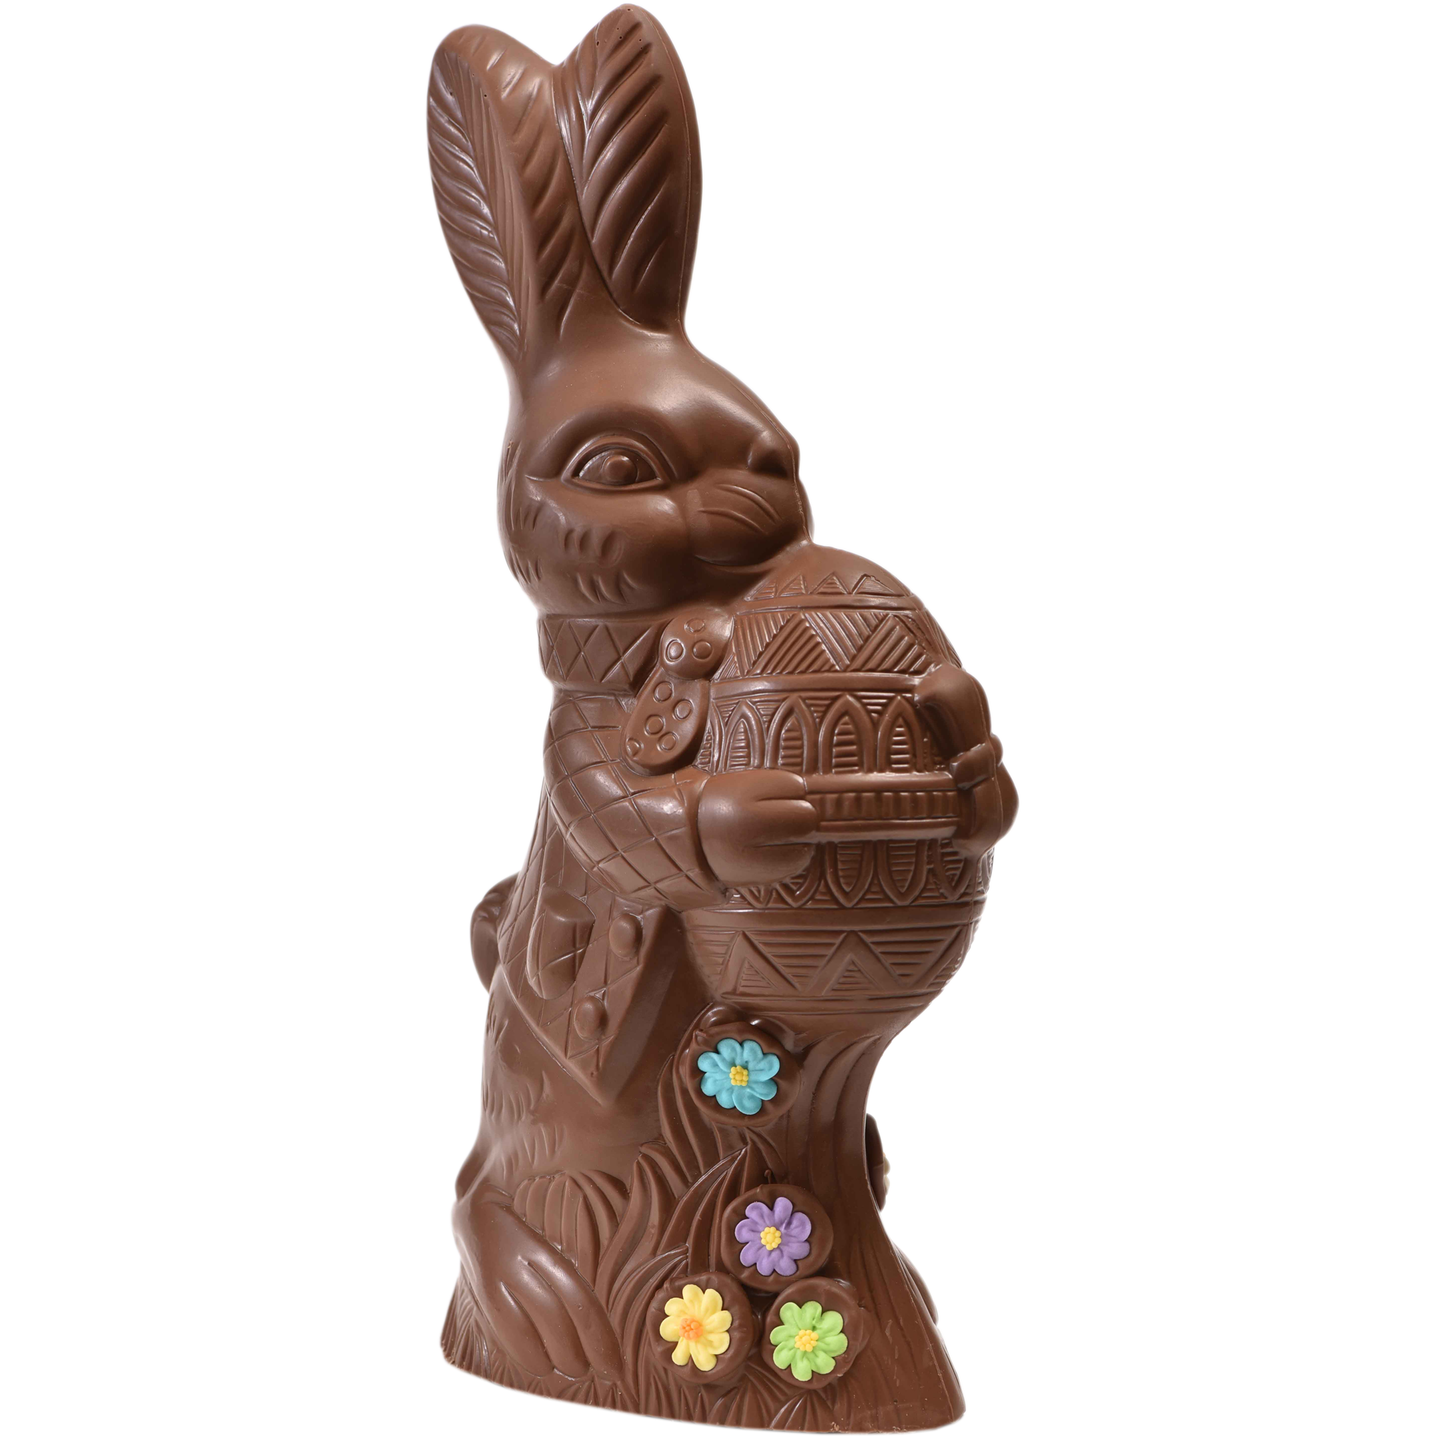 16" Milk Chocolate Easter Bunny # 47 - "Large Bunny Holding Egg"